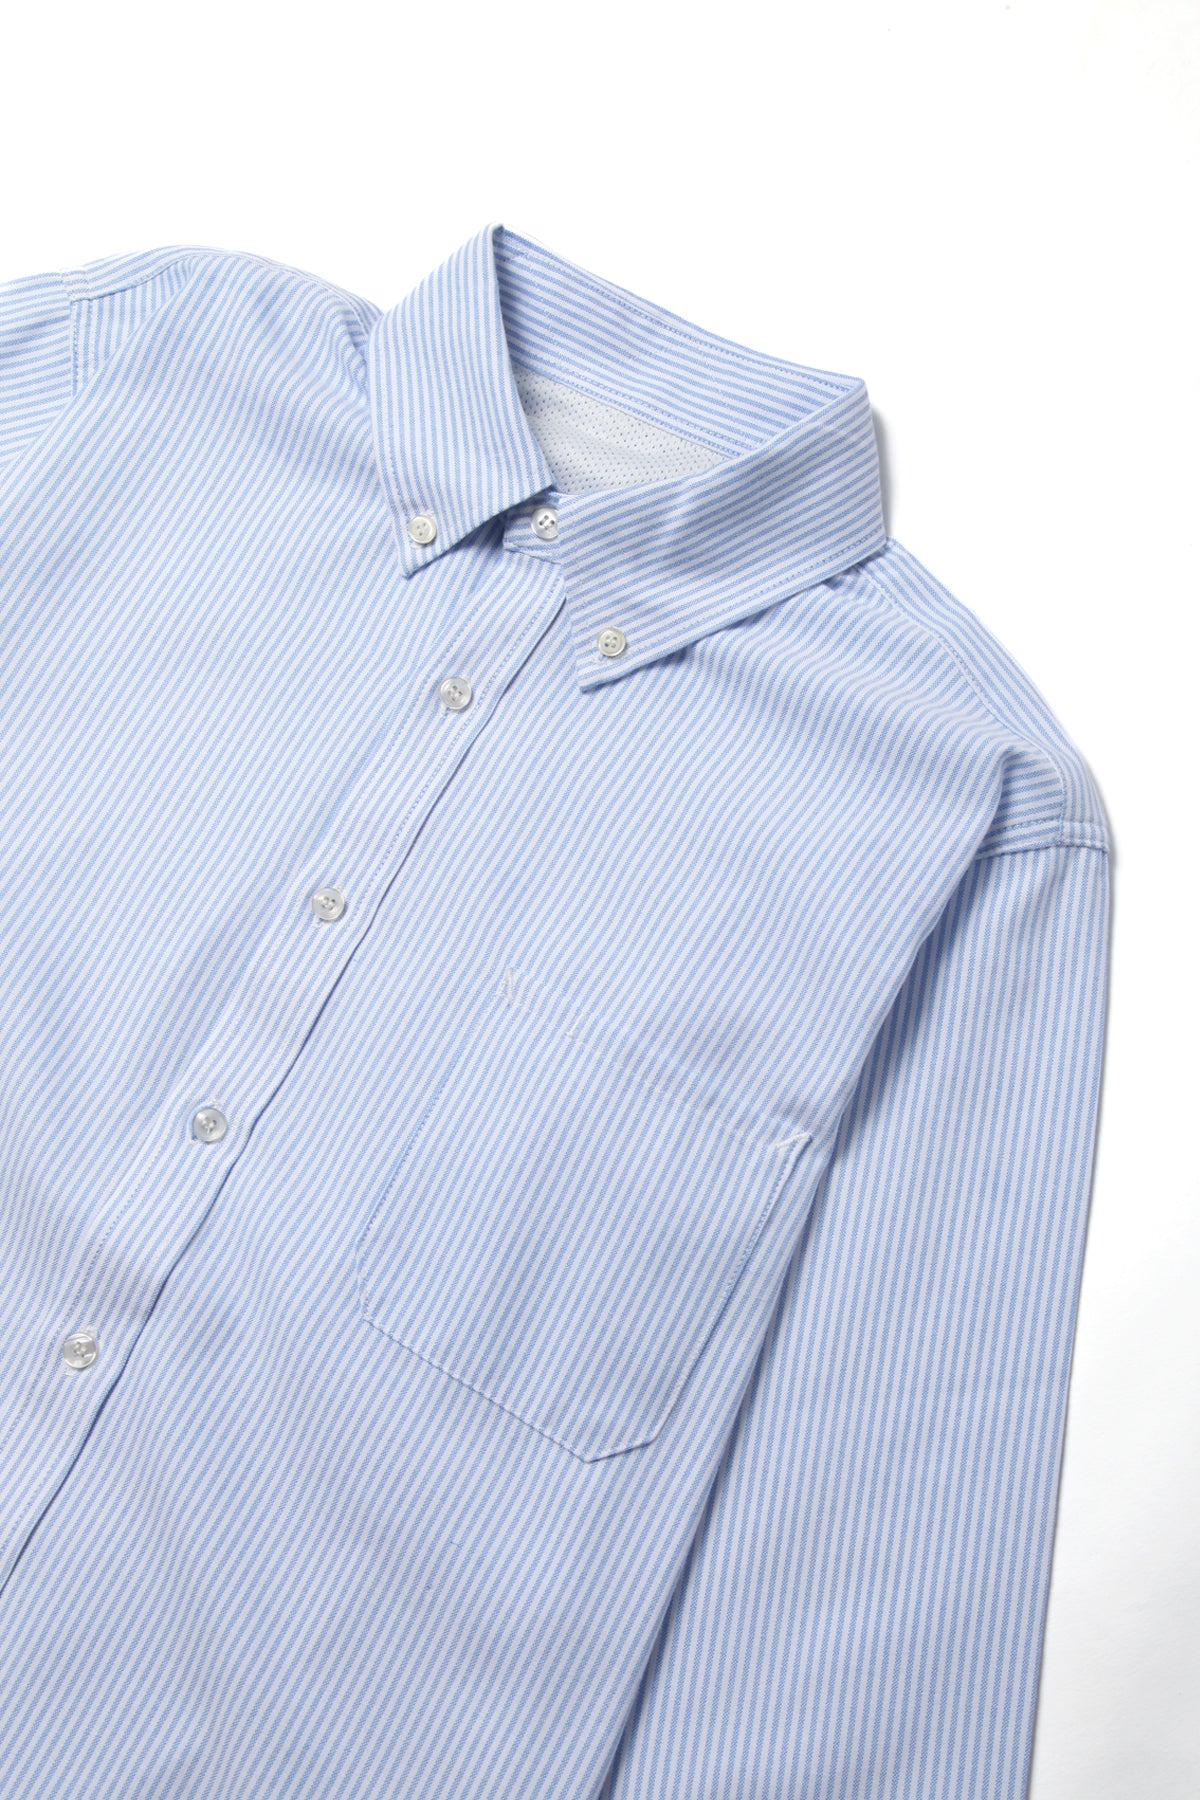 TRS - Striped Oxford Shirt - Blue